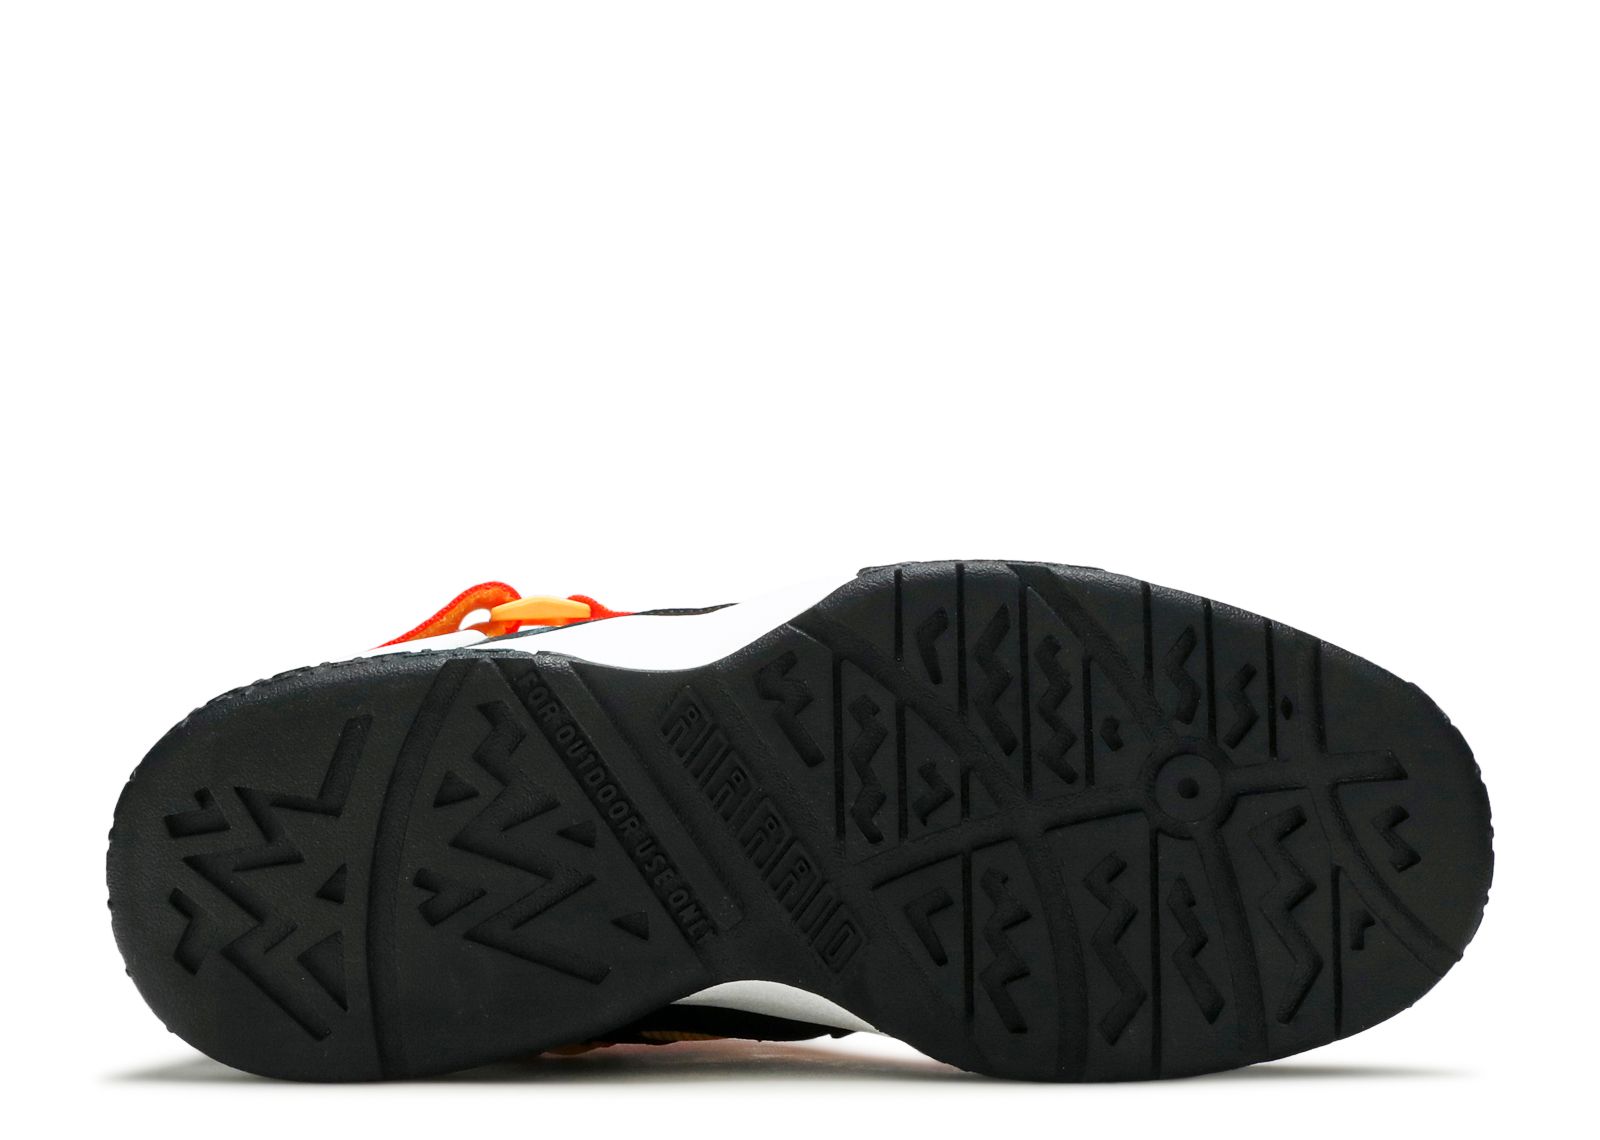 Nike Air Raid Rayguns Men's Shoes Black-Team Orange-University Gold